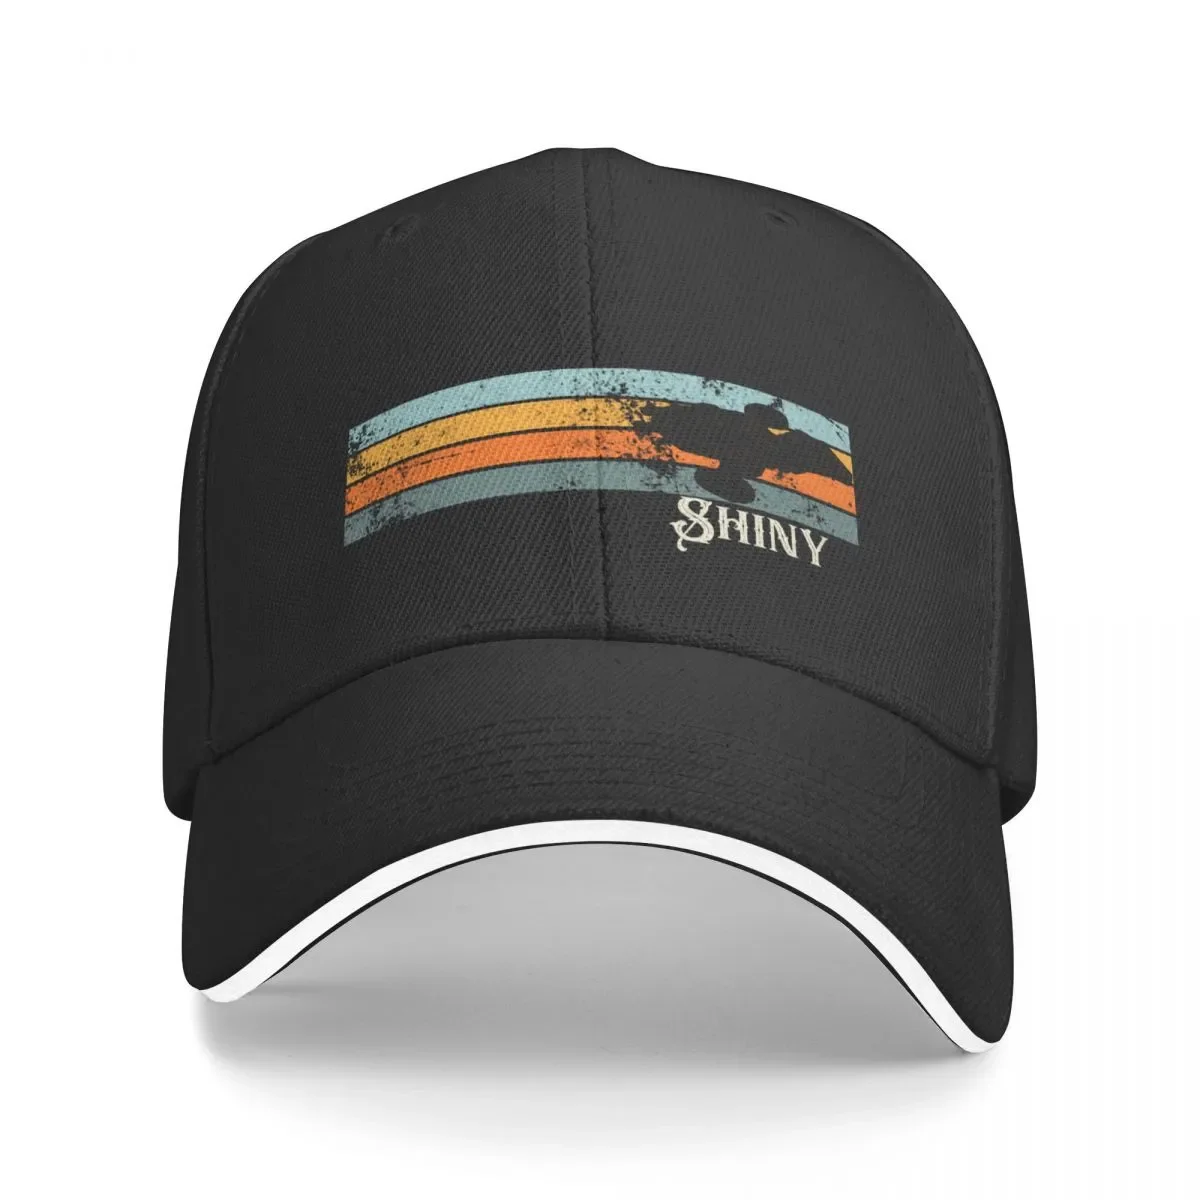 

New Shiny Firefly Serenity Cap Baseball Cap Ball cap military tactical cap Caps golf hat women Men's